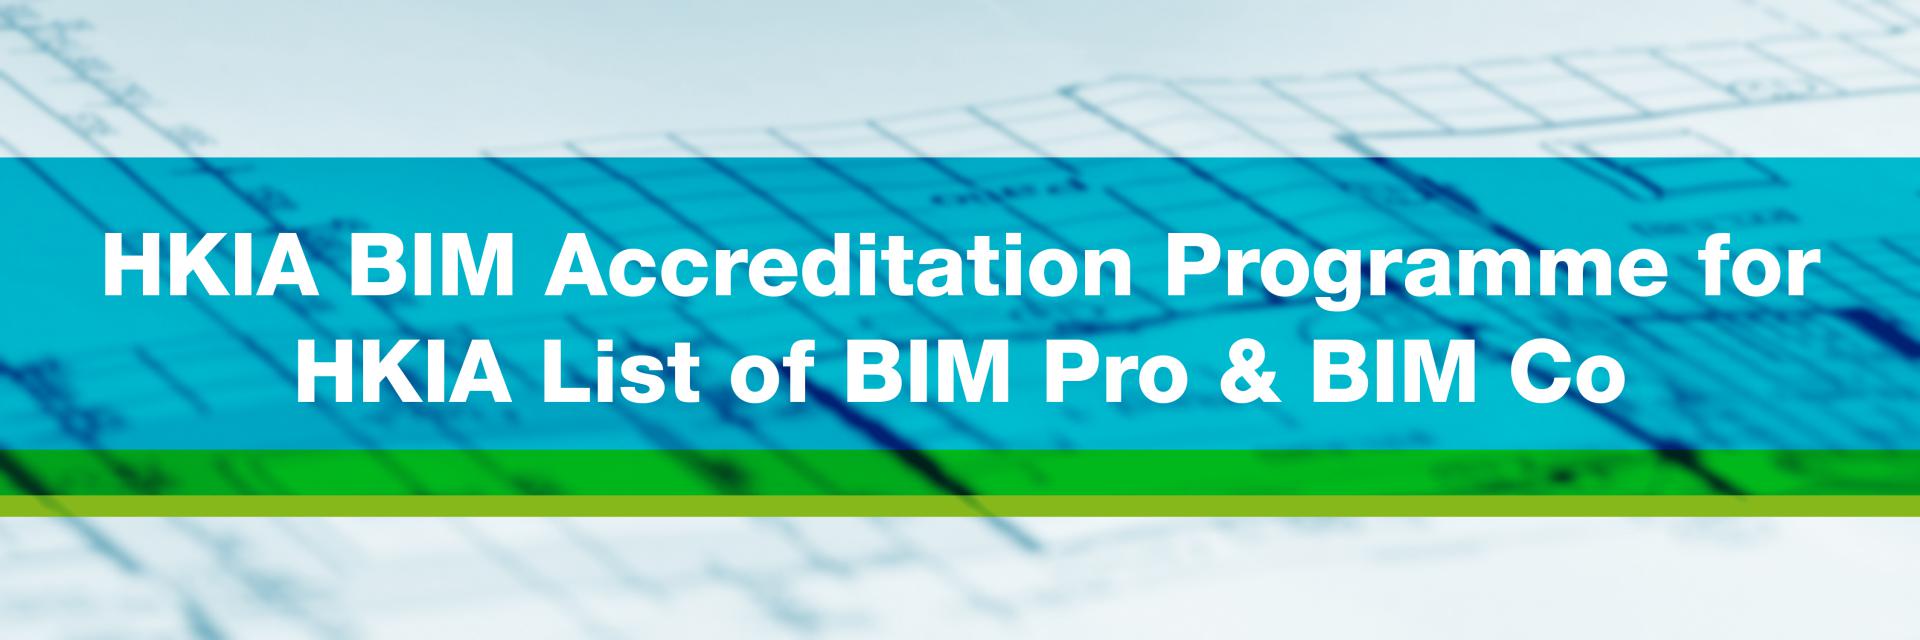 HKIA BIM Accreditation Programme for HKIA List of BIM Pro & BIM Co (English only)